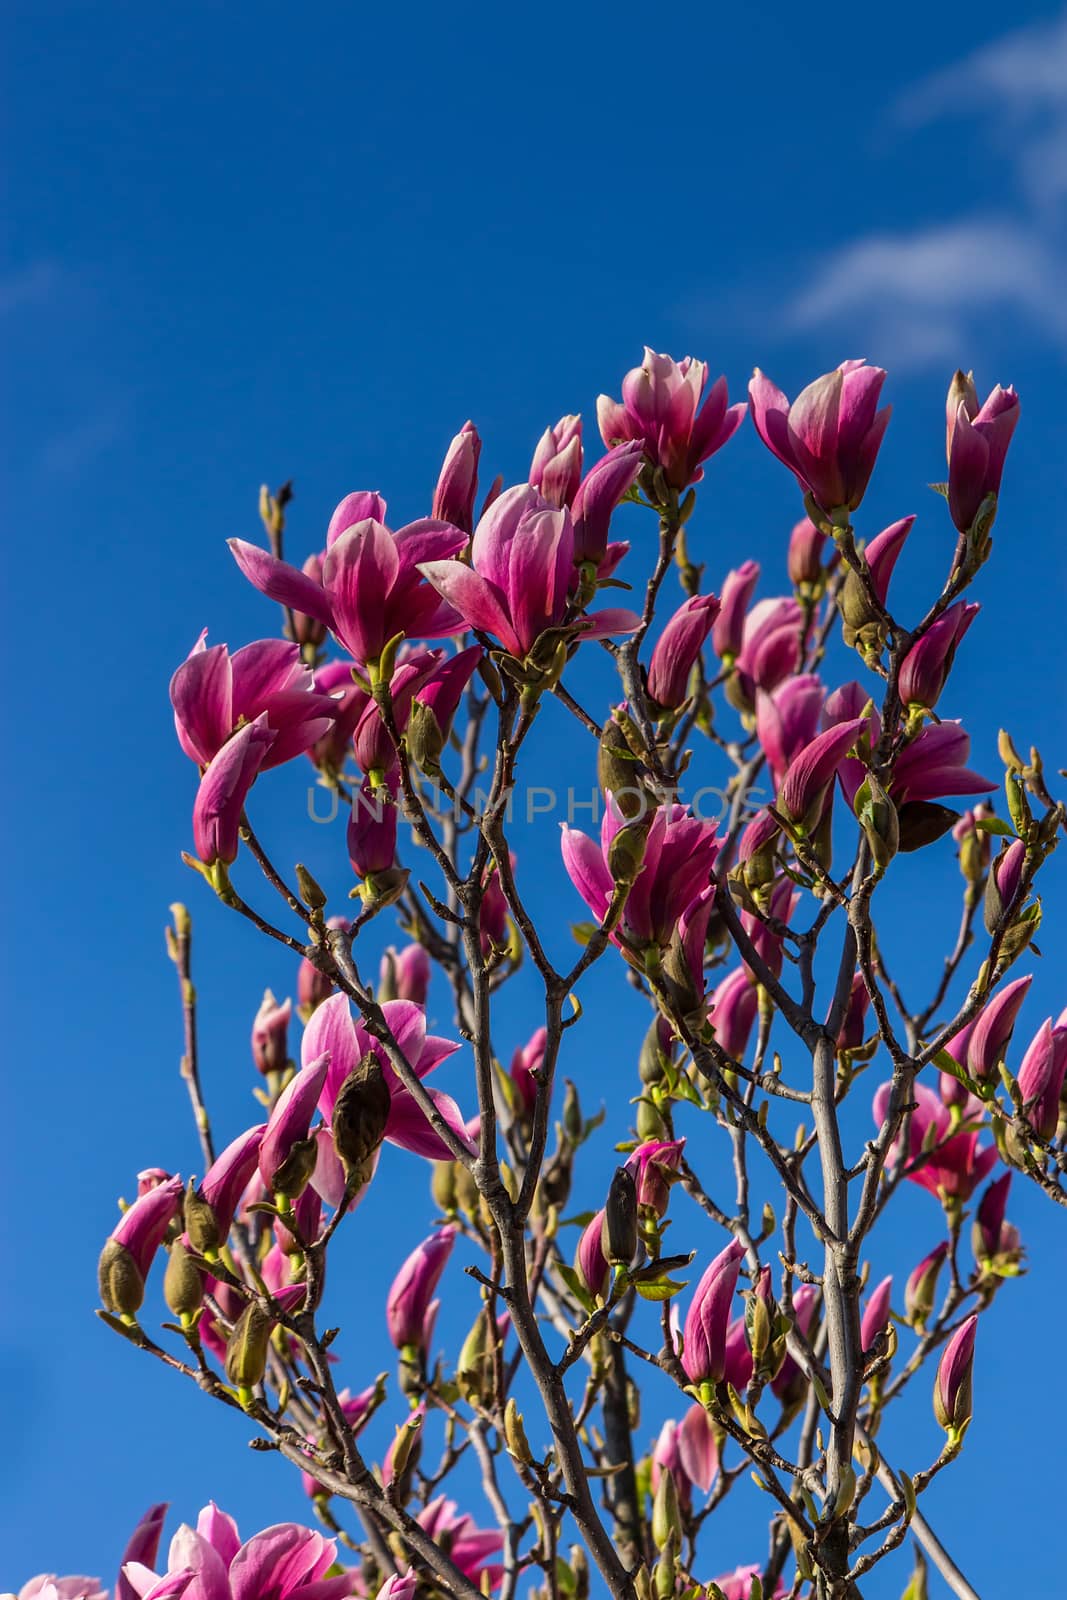 magnolia flowers close up on a blur blue sky background